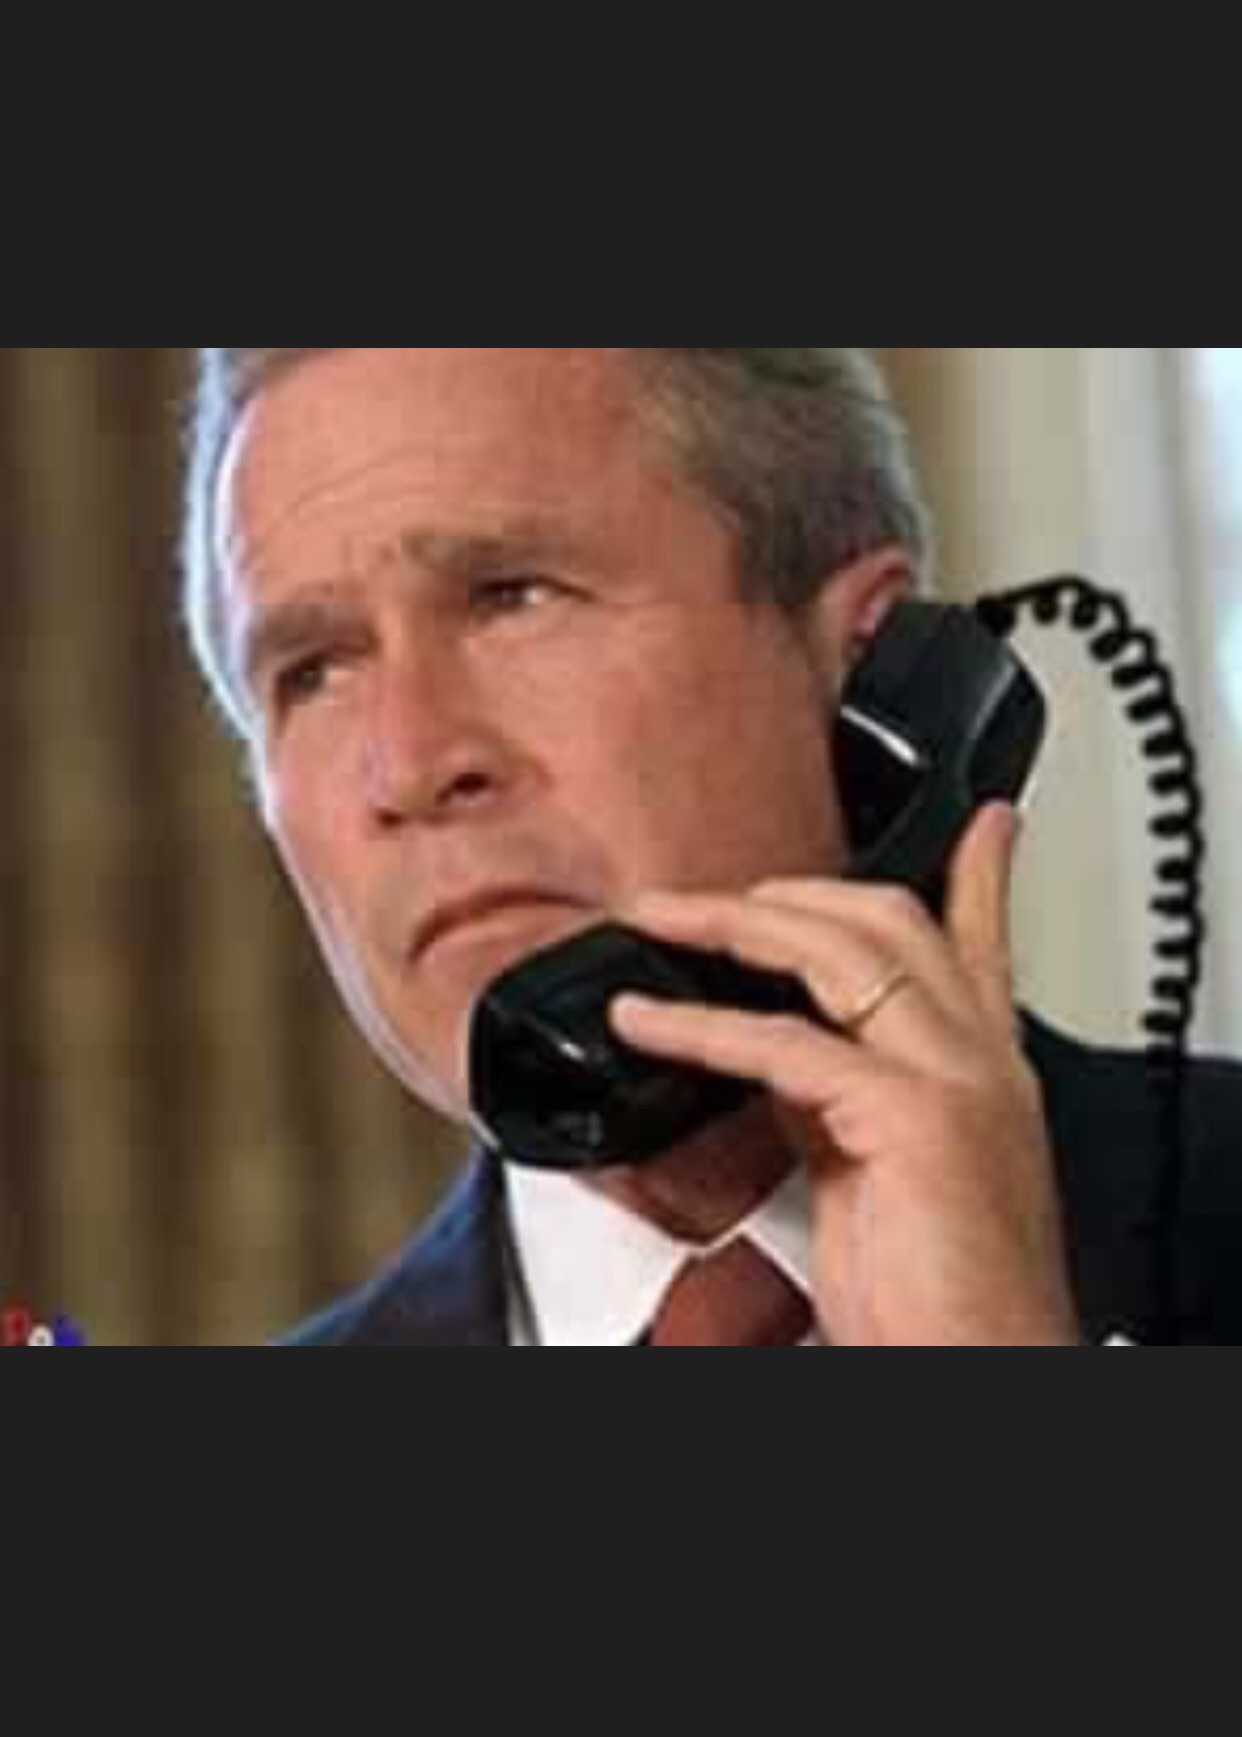 George Bush Meme Template prntbl concejomunicipaldechinu gov co